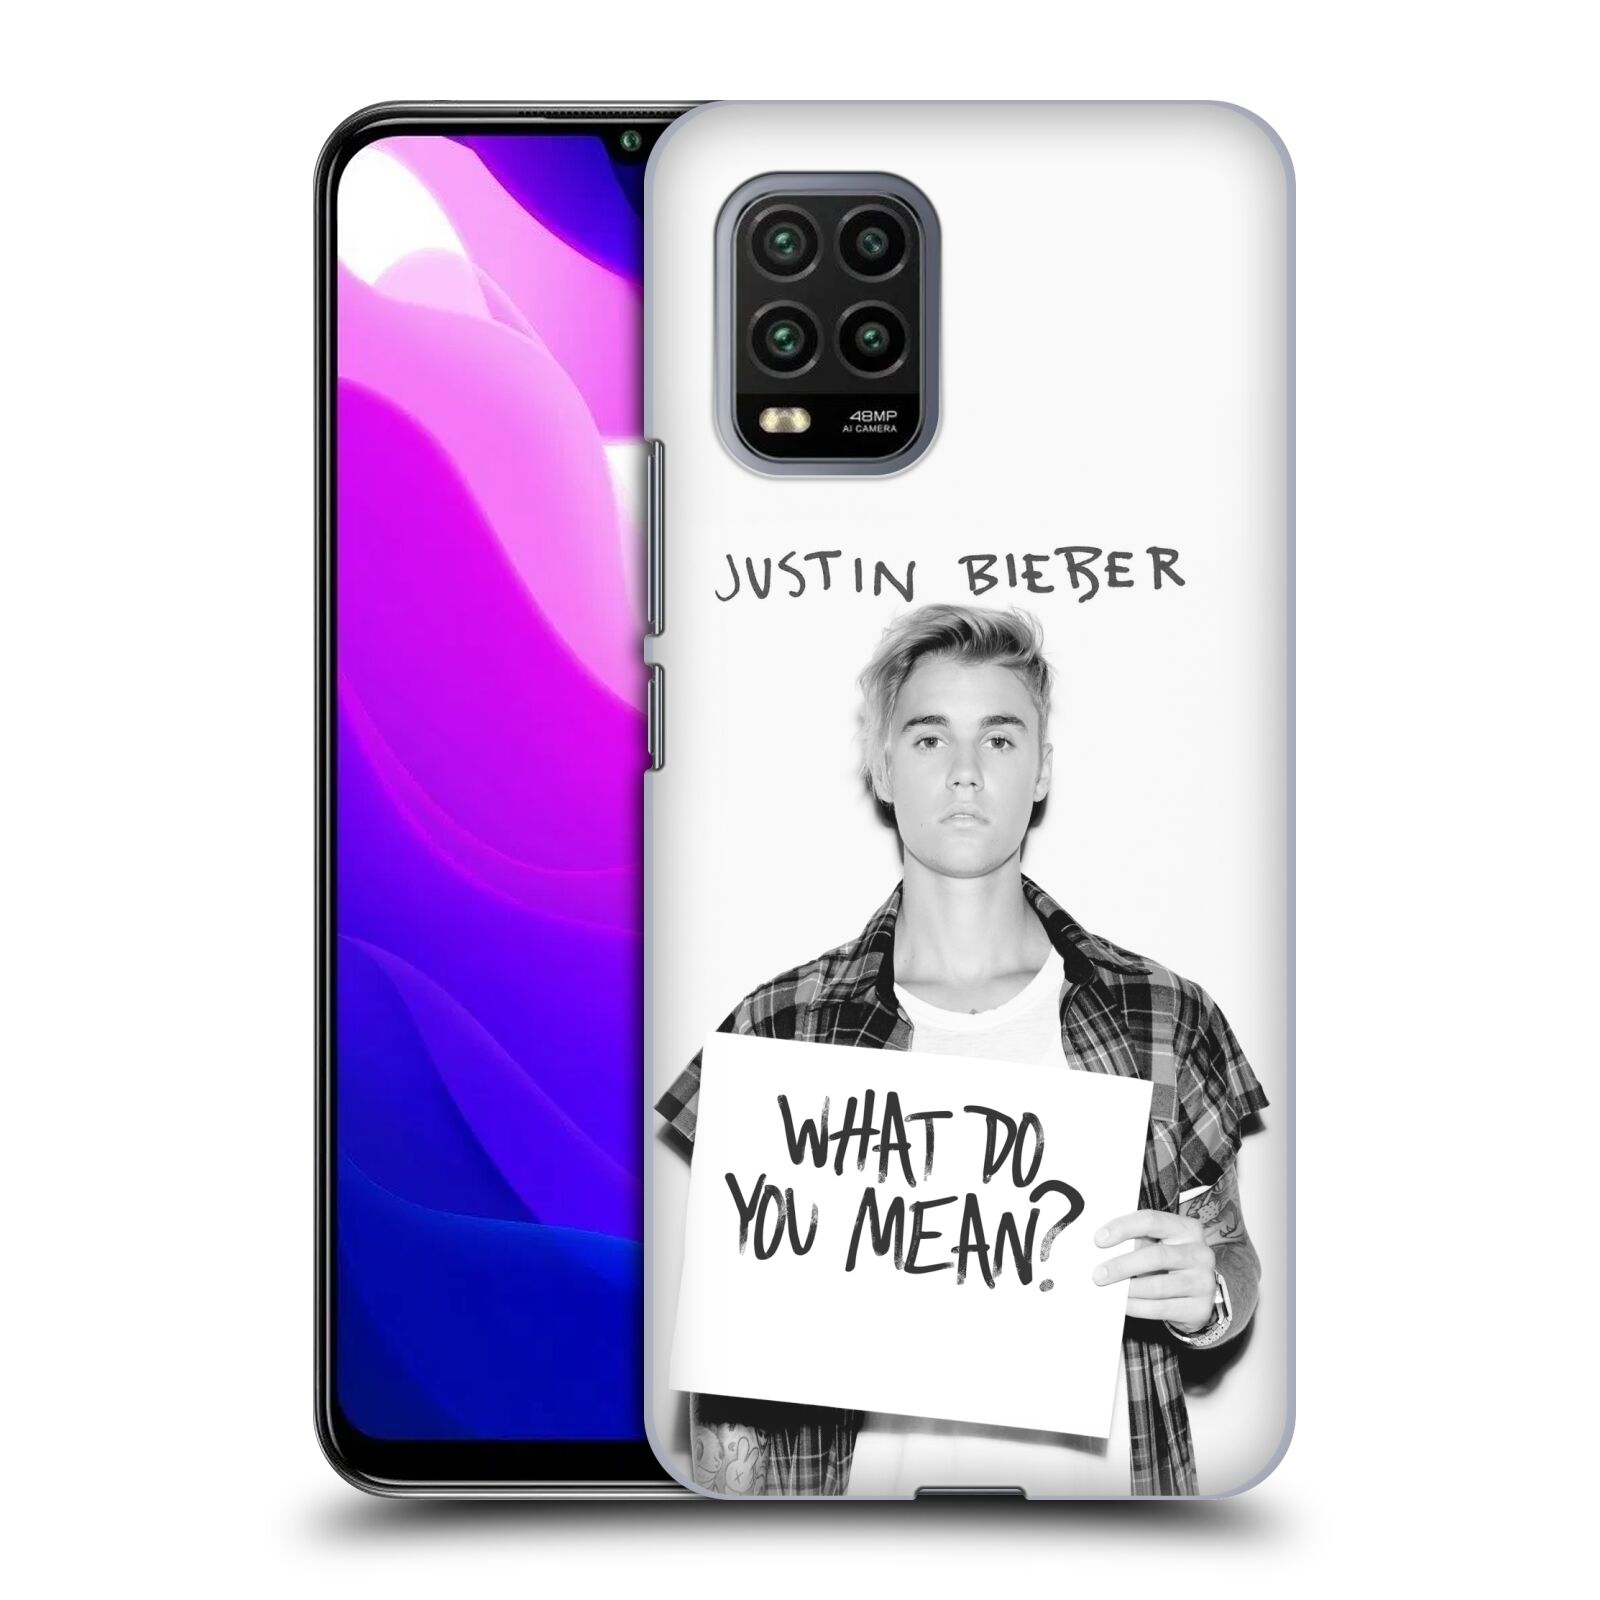 Zadní kryt, obal na mobil Xiaomi Mi 10 LITE Justin Bieber foto Purpose What do you mean